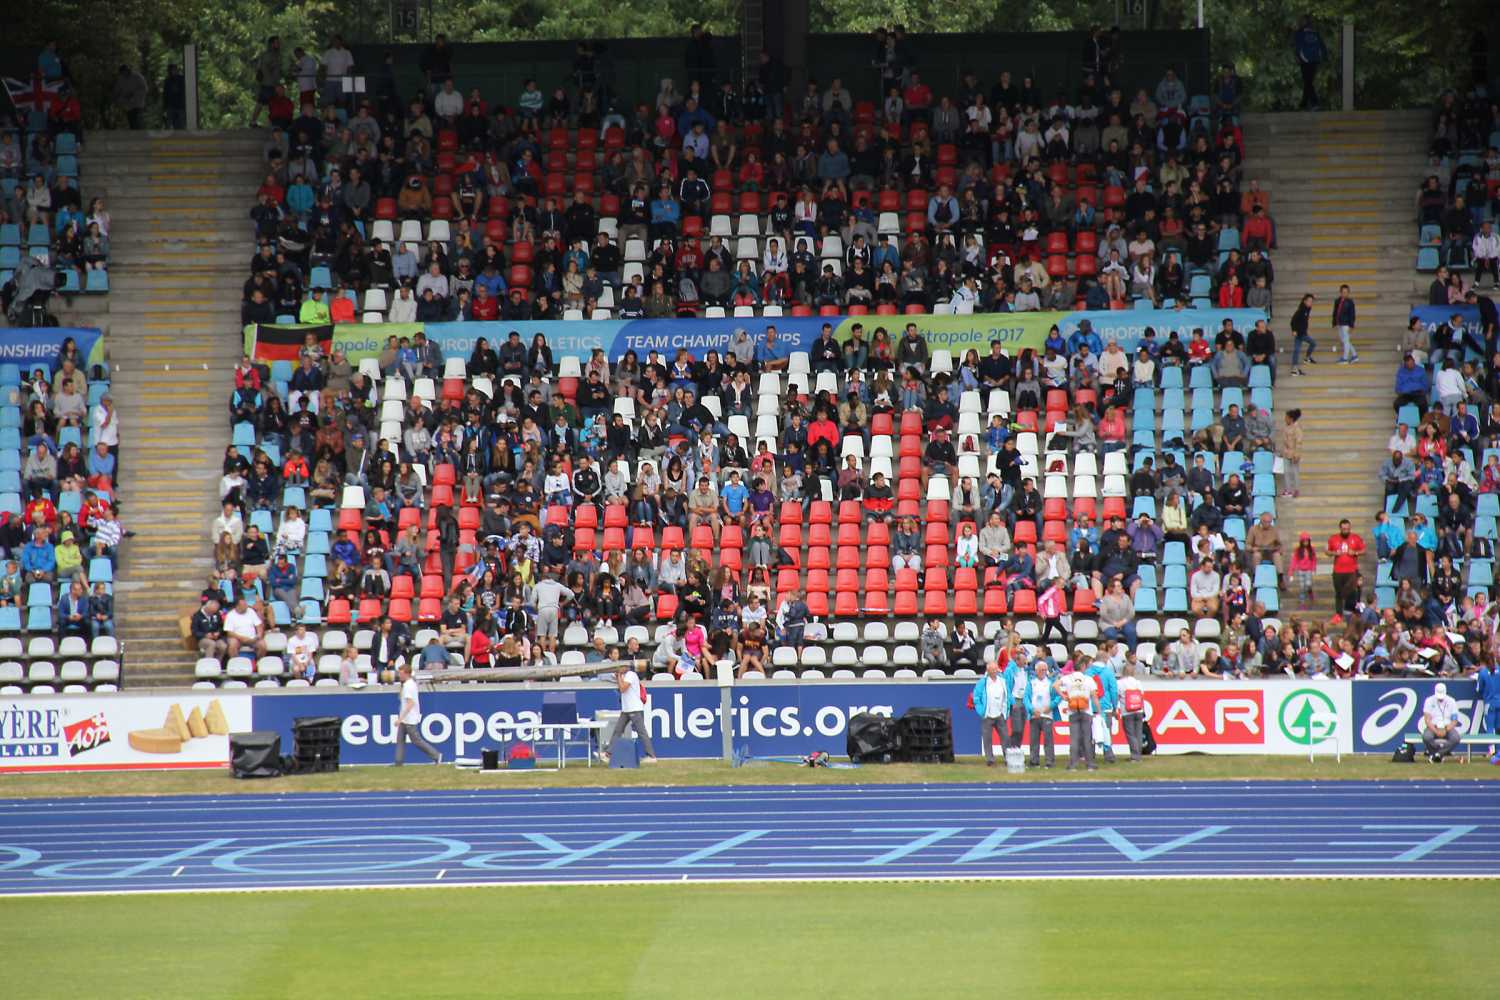 The European Athletics Team Championshipstook place at the Lille-Métropole Stadium